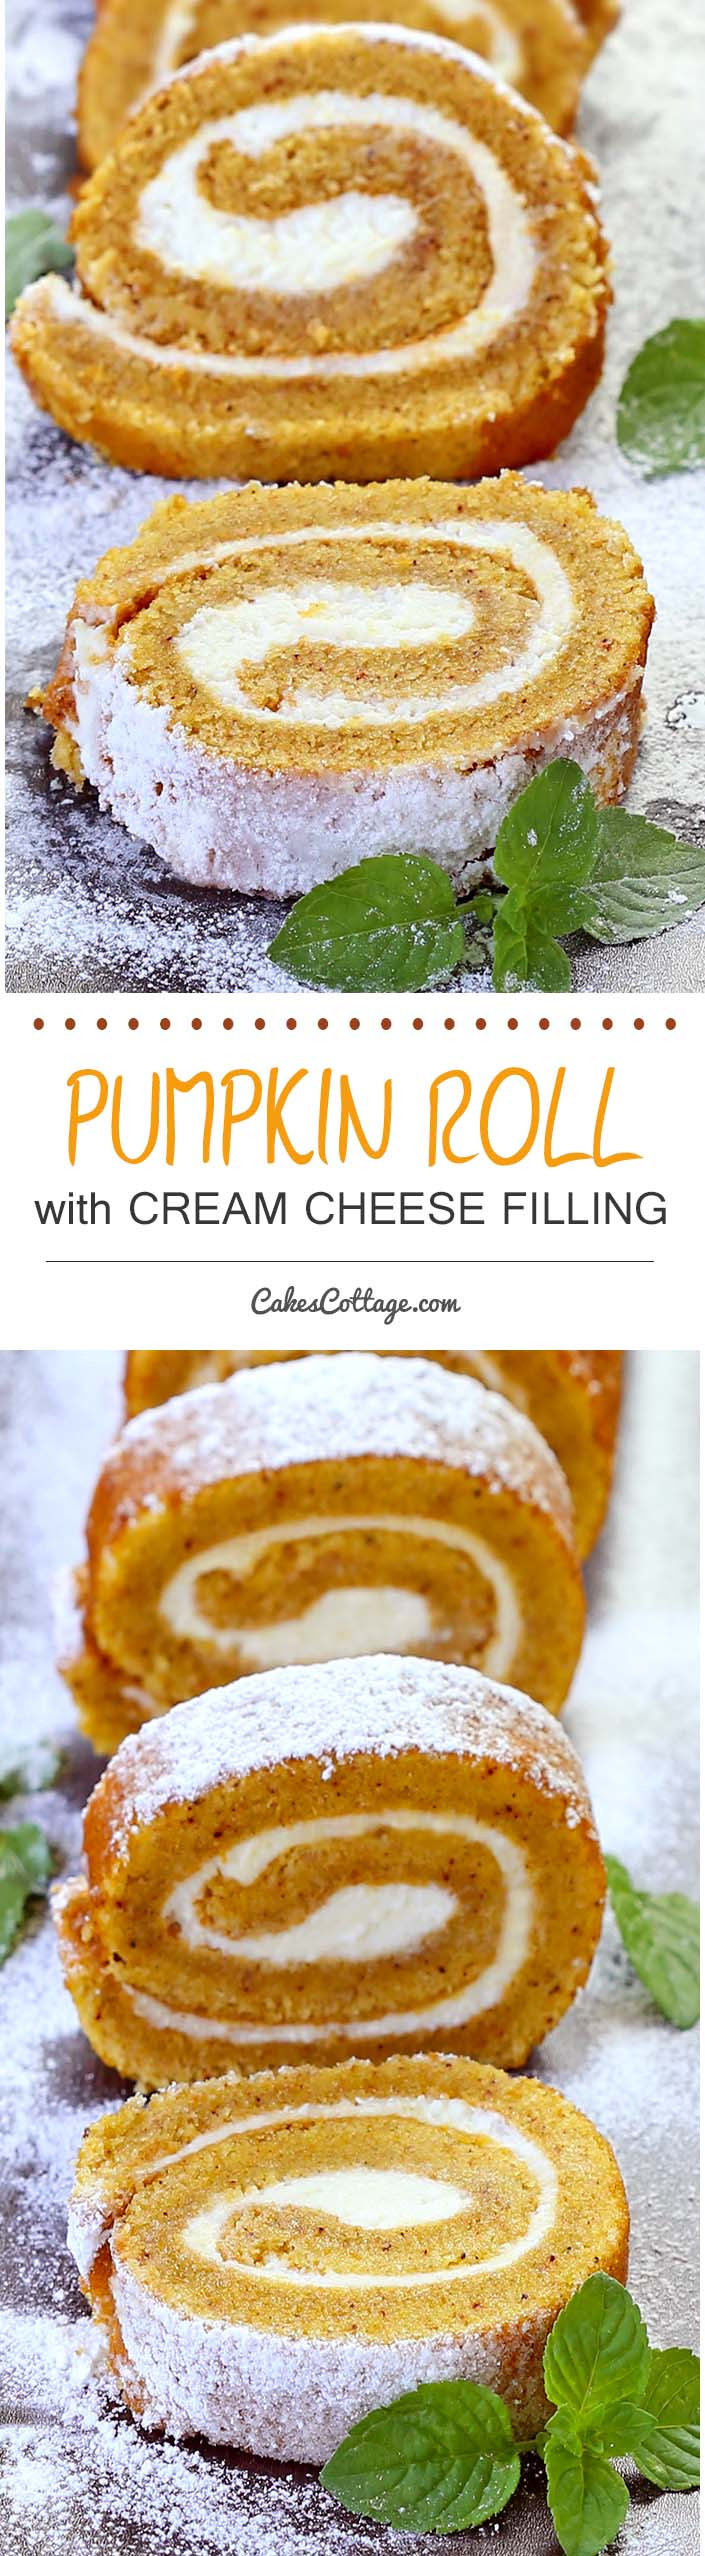 Pumpkin Rolls Recipe With Cream Cheese Filling
 Pumpkin Roll with Cream Cheese Filling Cakescottage